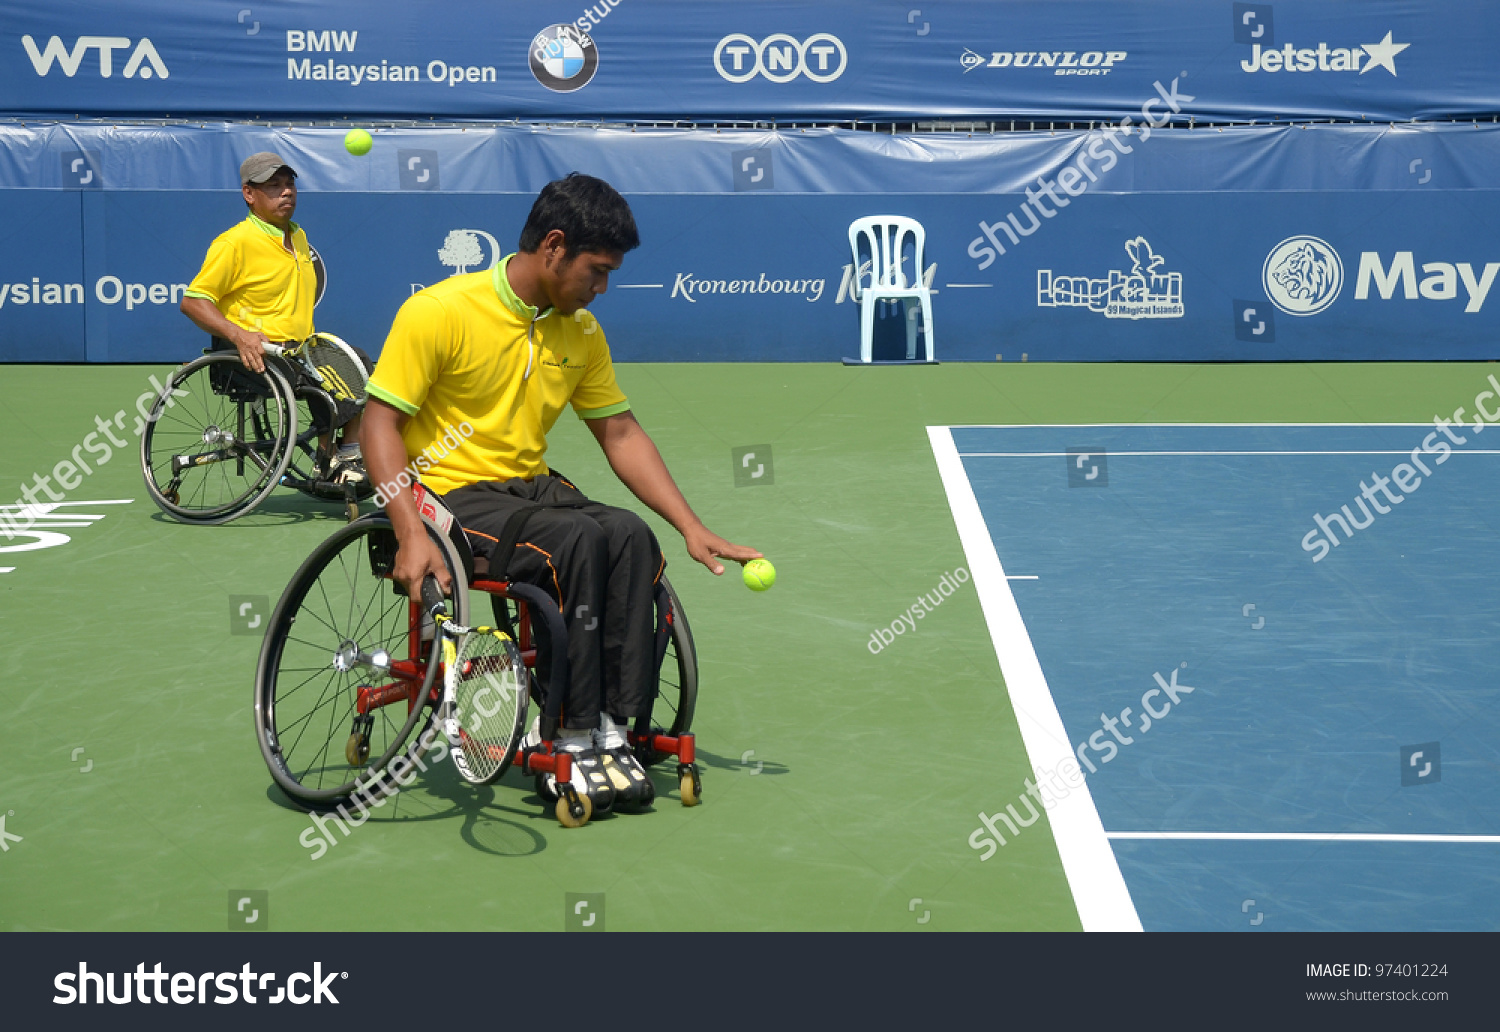 Abu samah borhan paralympics